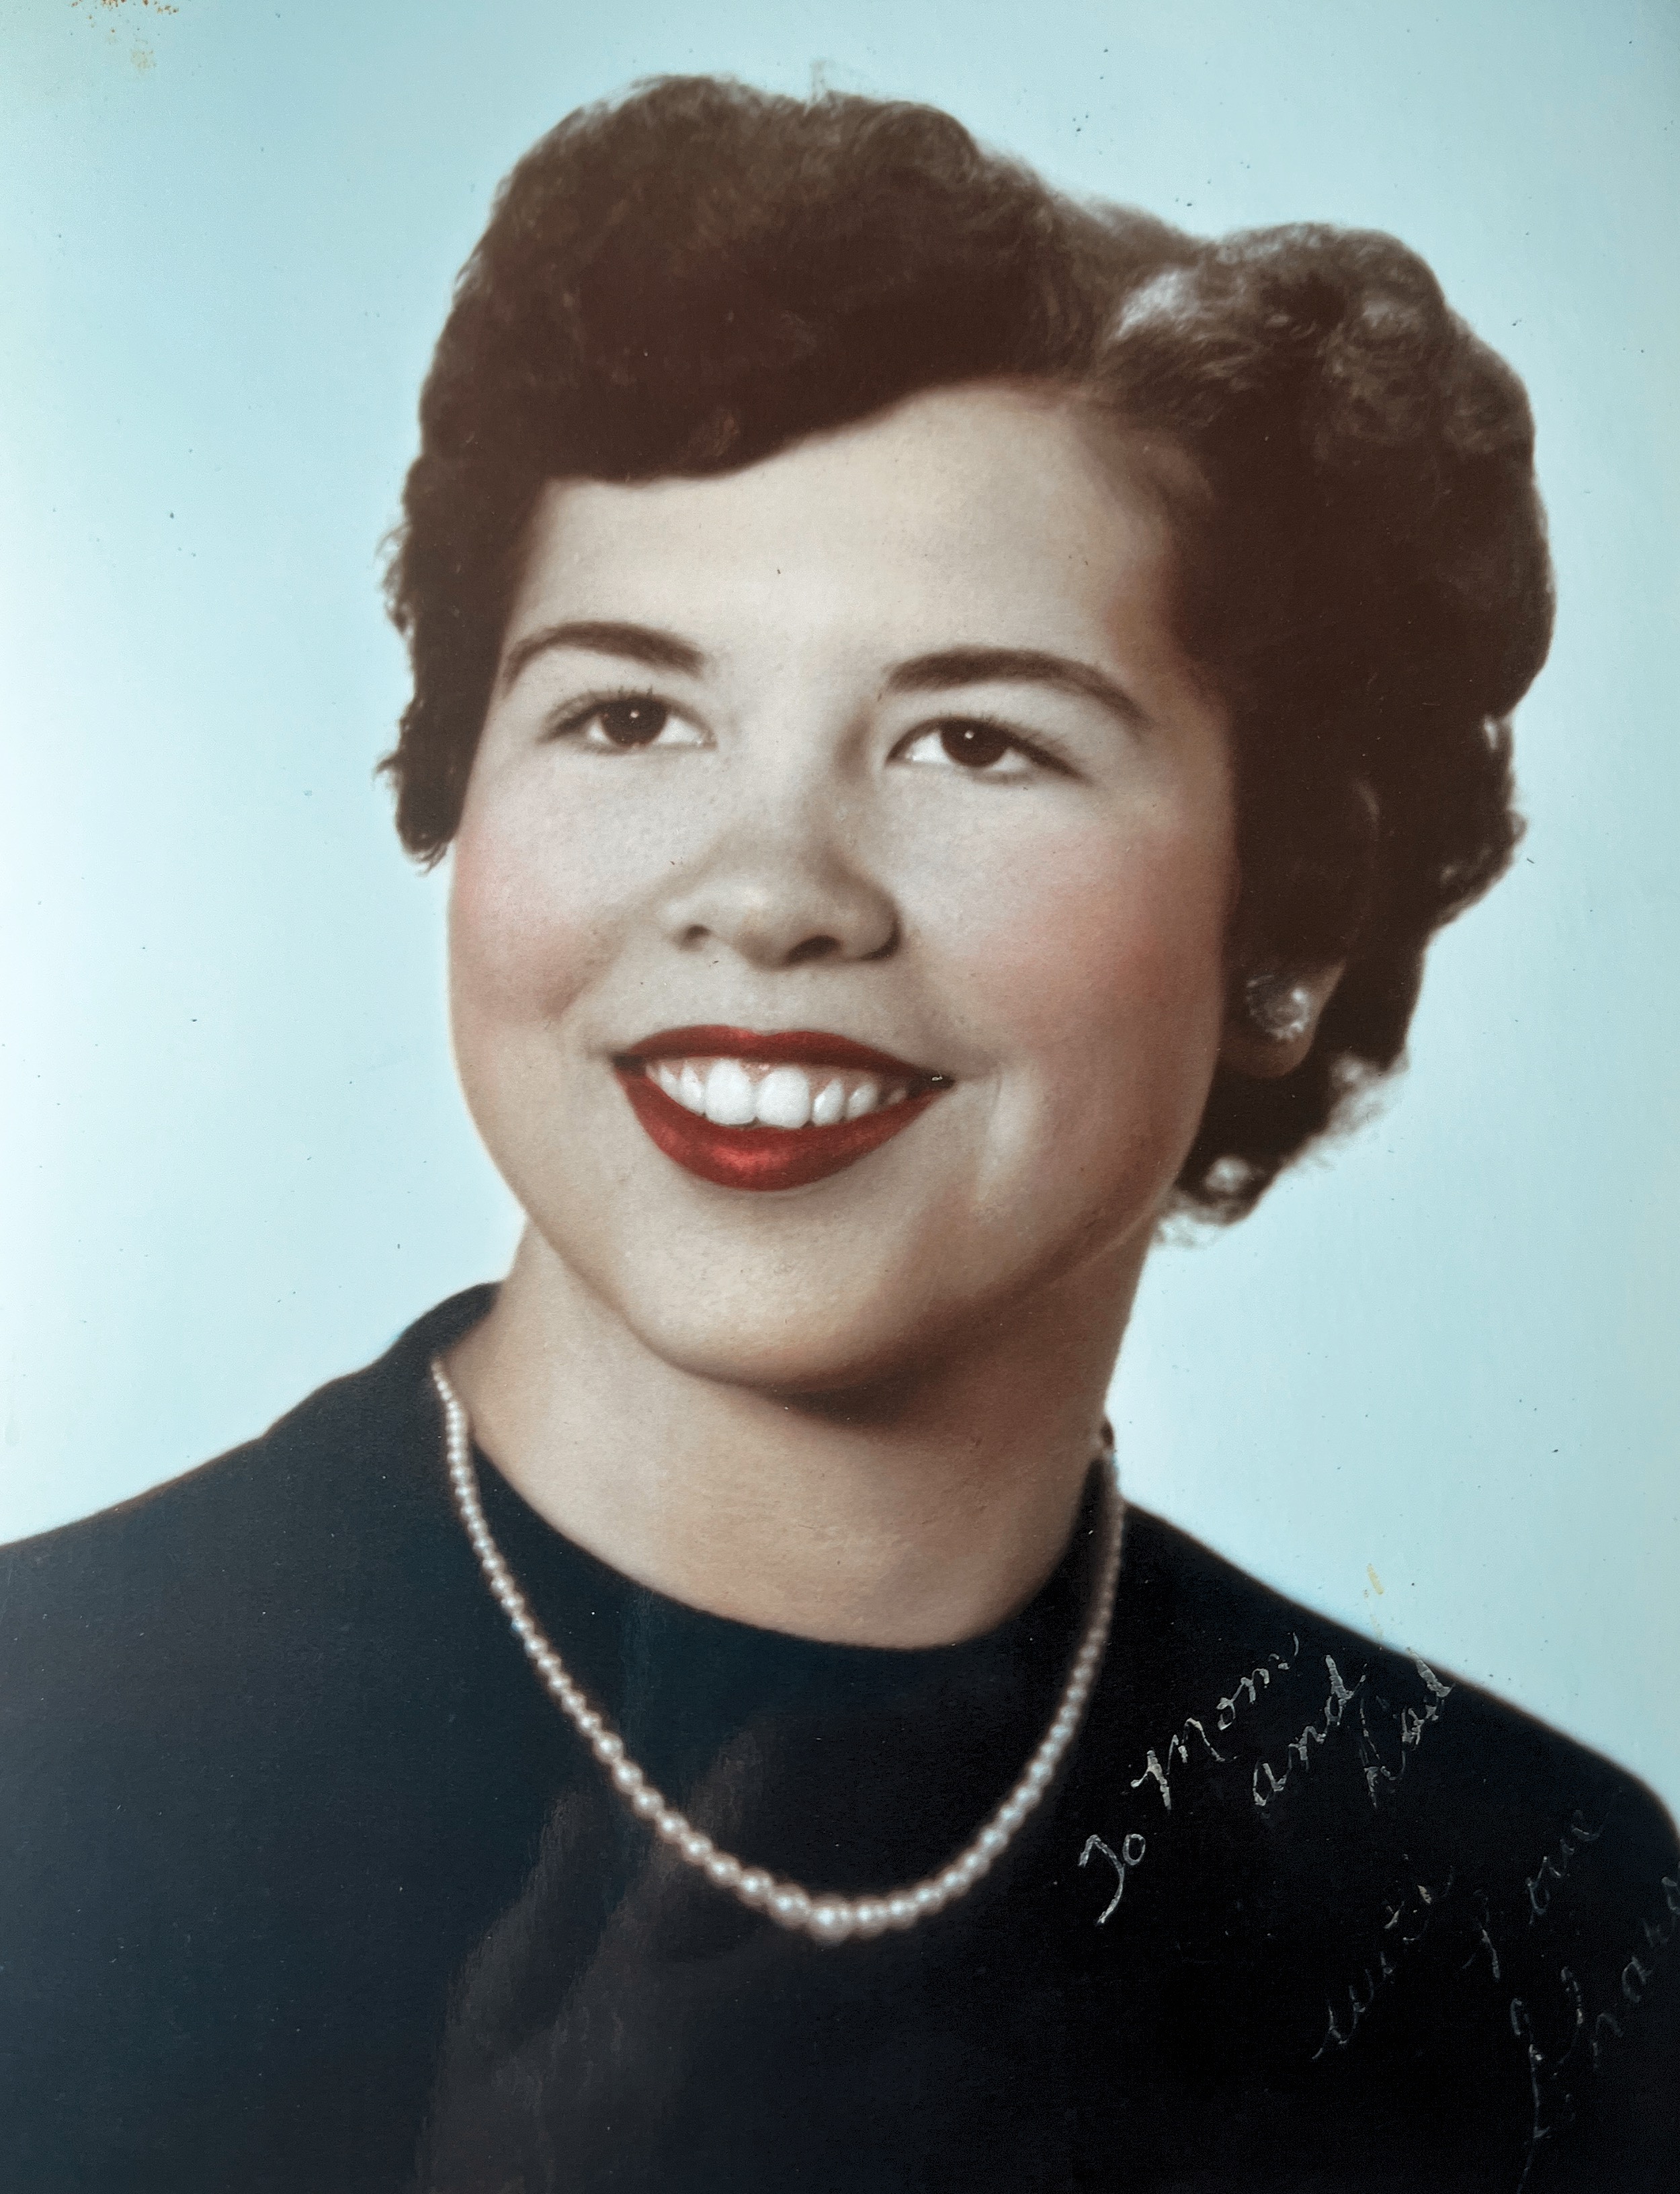 My Grandmother Senior picture 1955